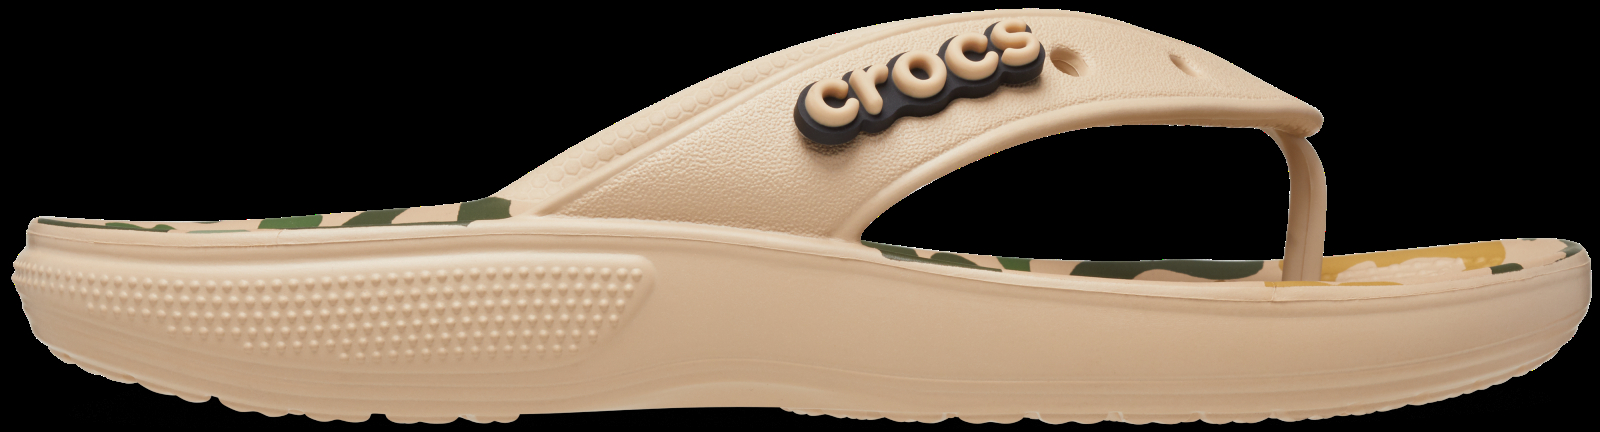 Dámské žabky Crocs CLASSIC Camo béžová 39-40